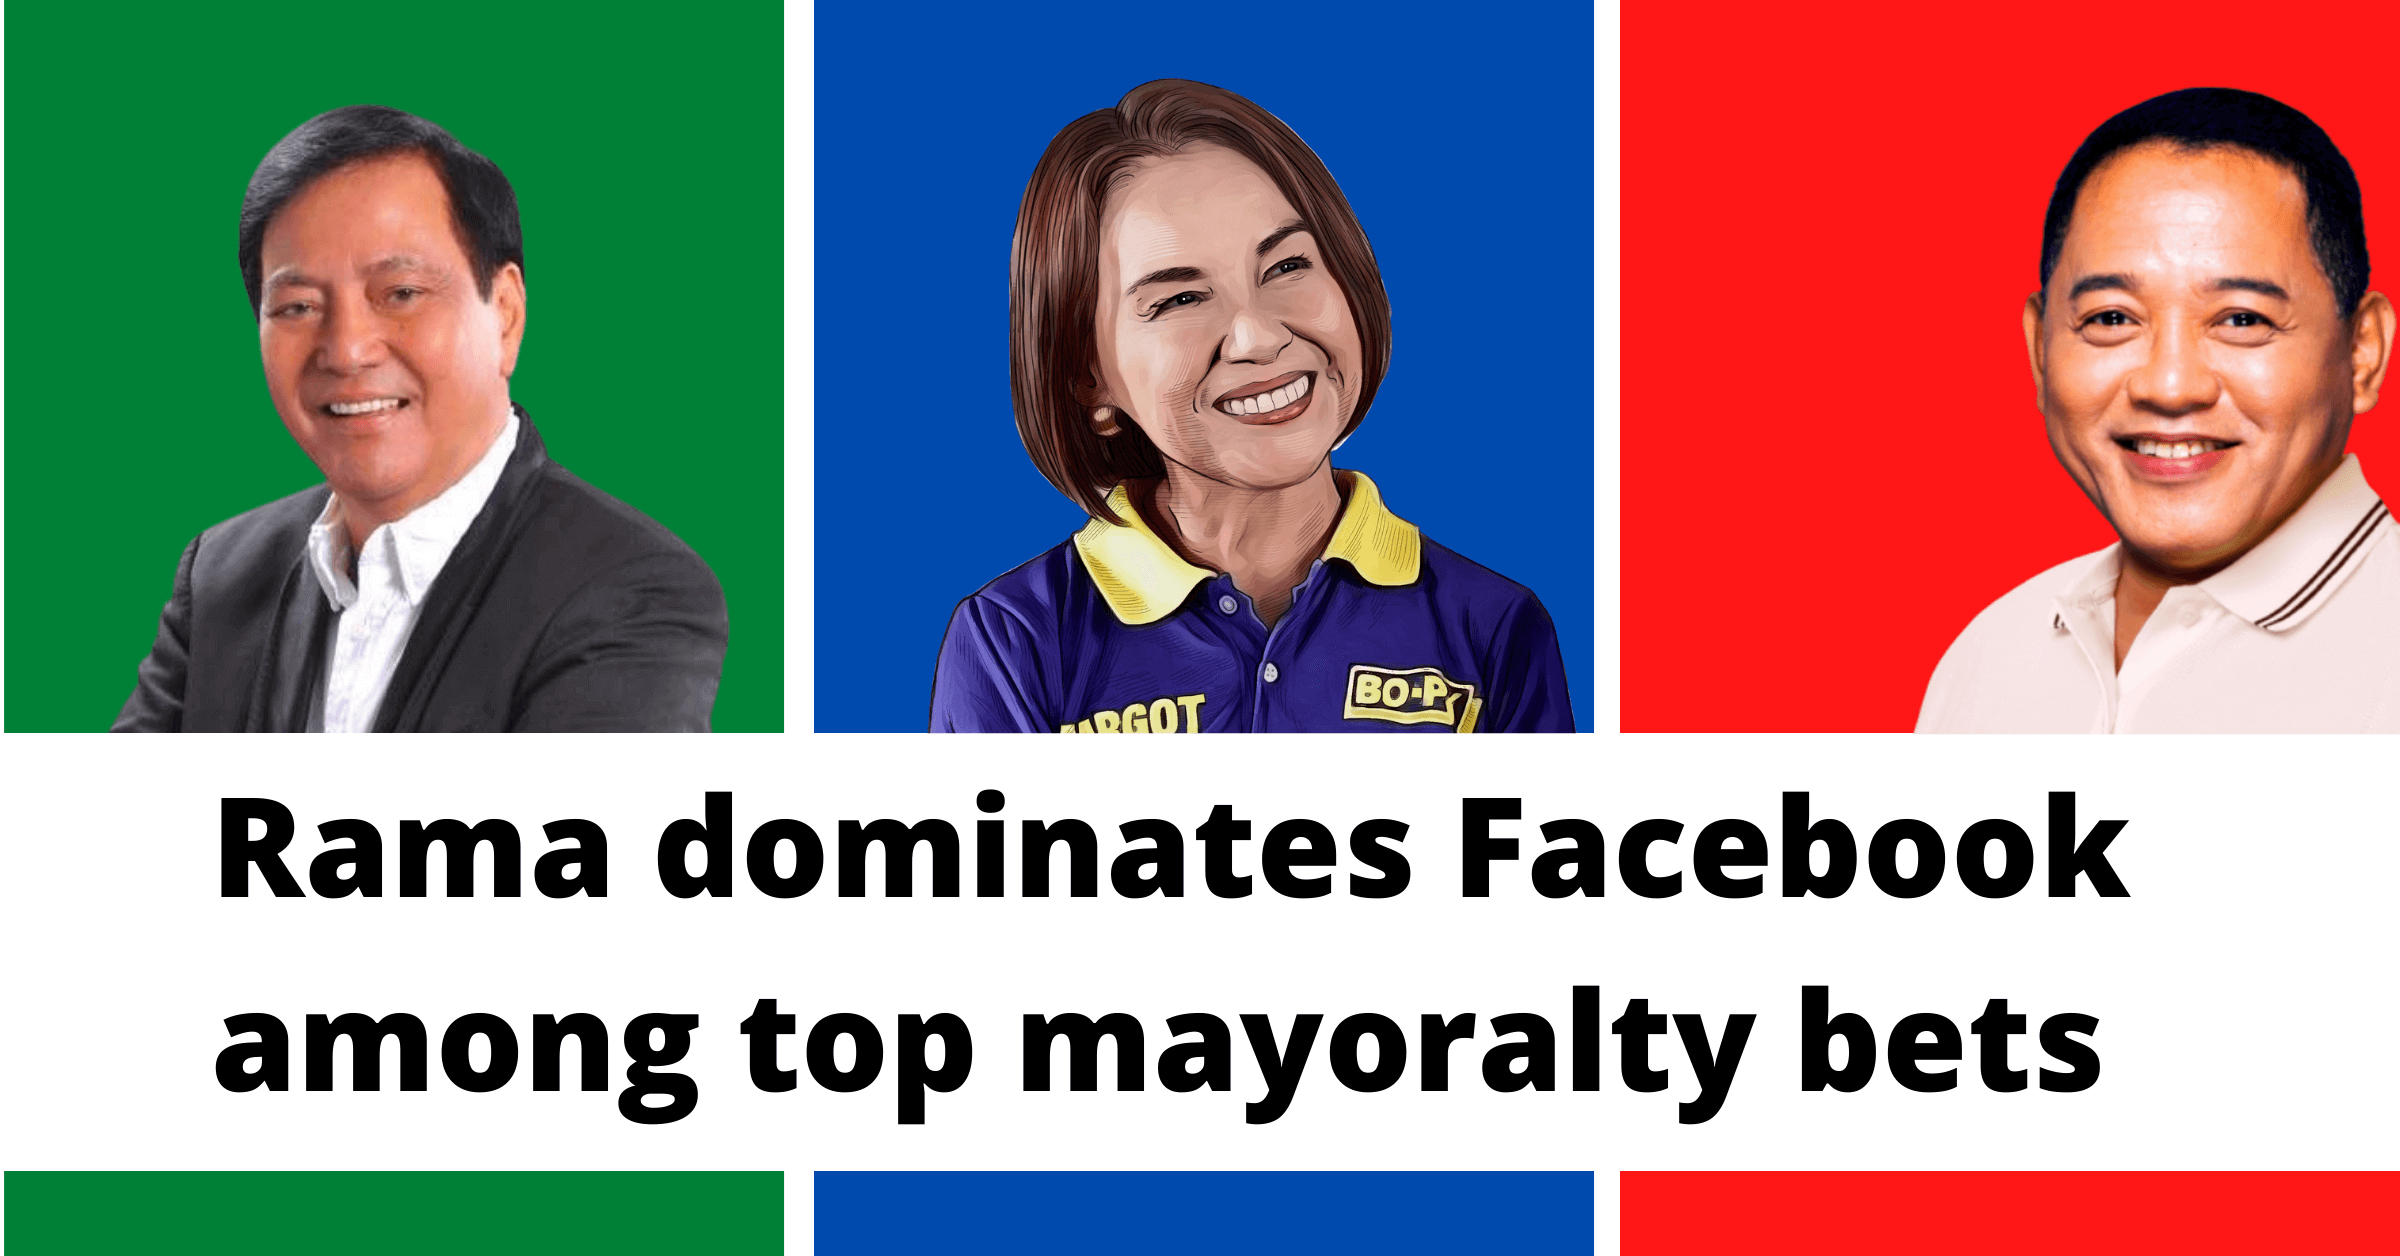 Rama dominates mayoralty rivals on Facebook